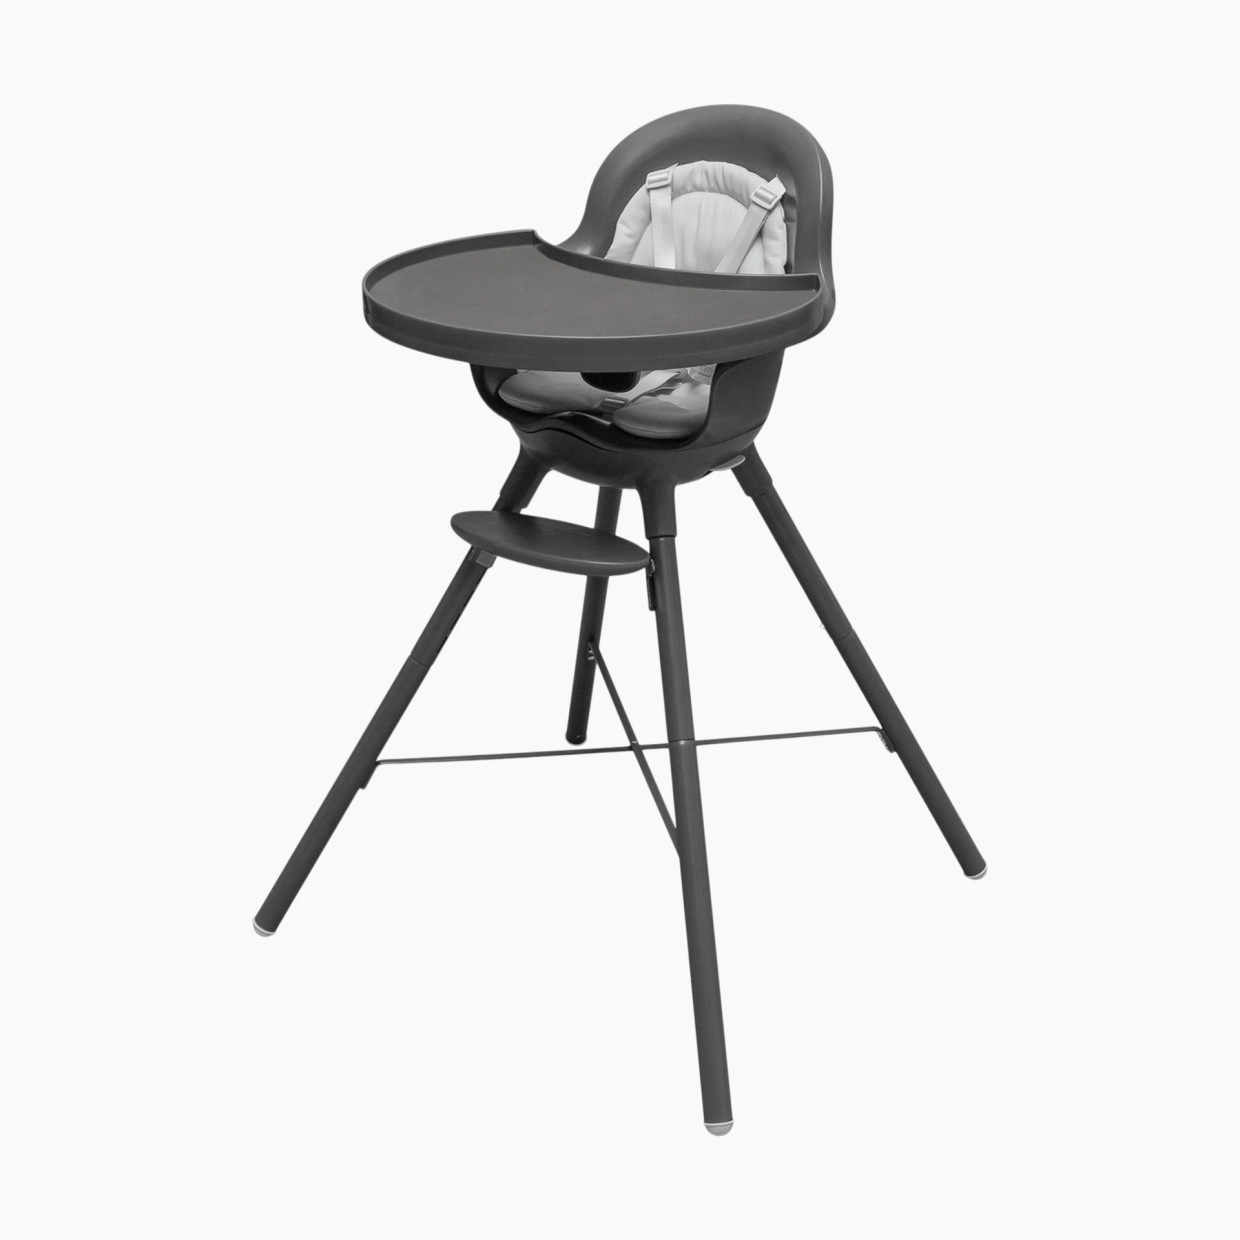 Boon Grub Dishwasher Safe Adjustable Baby High Chair - Charcoal.